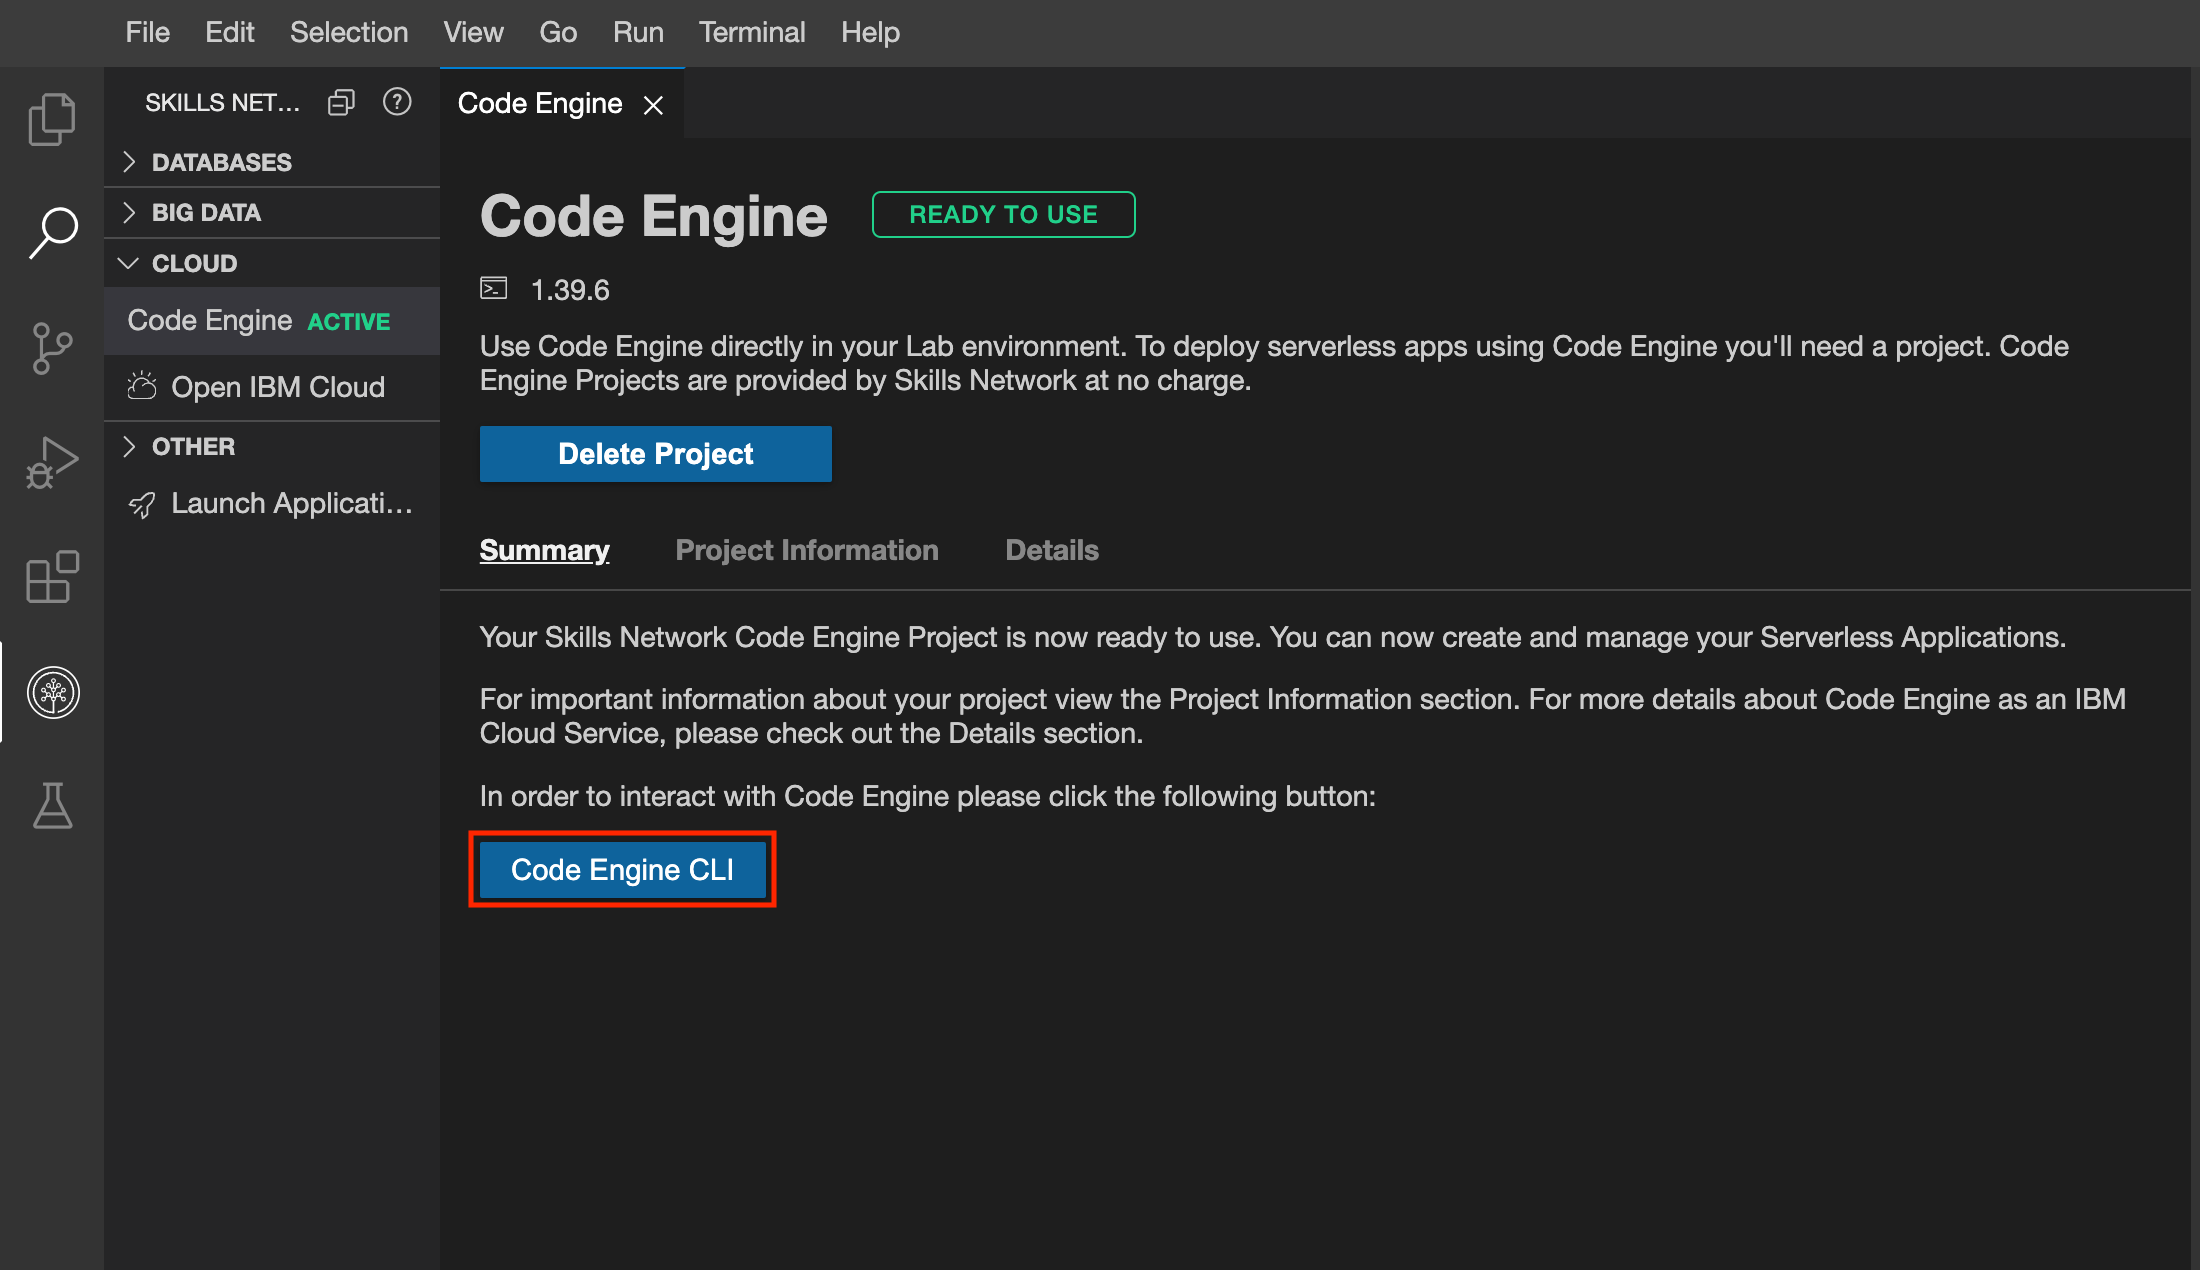 Code Engine CLI